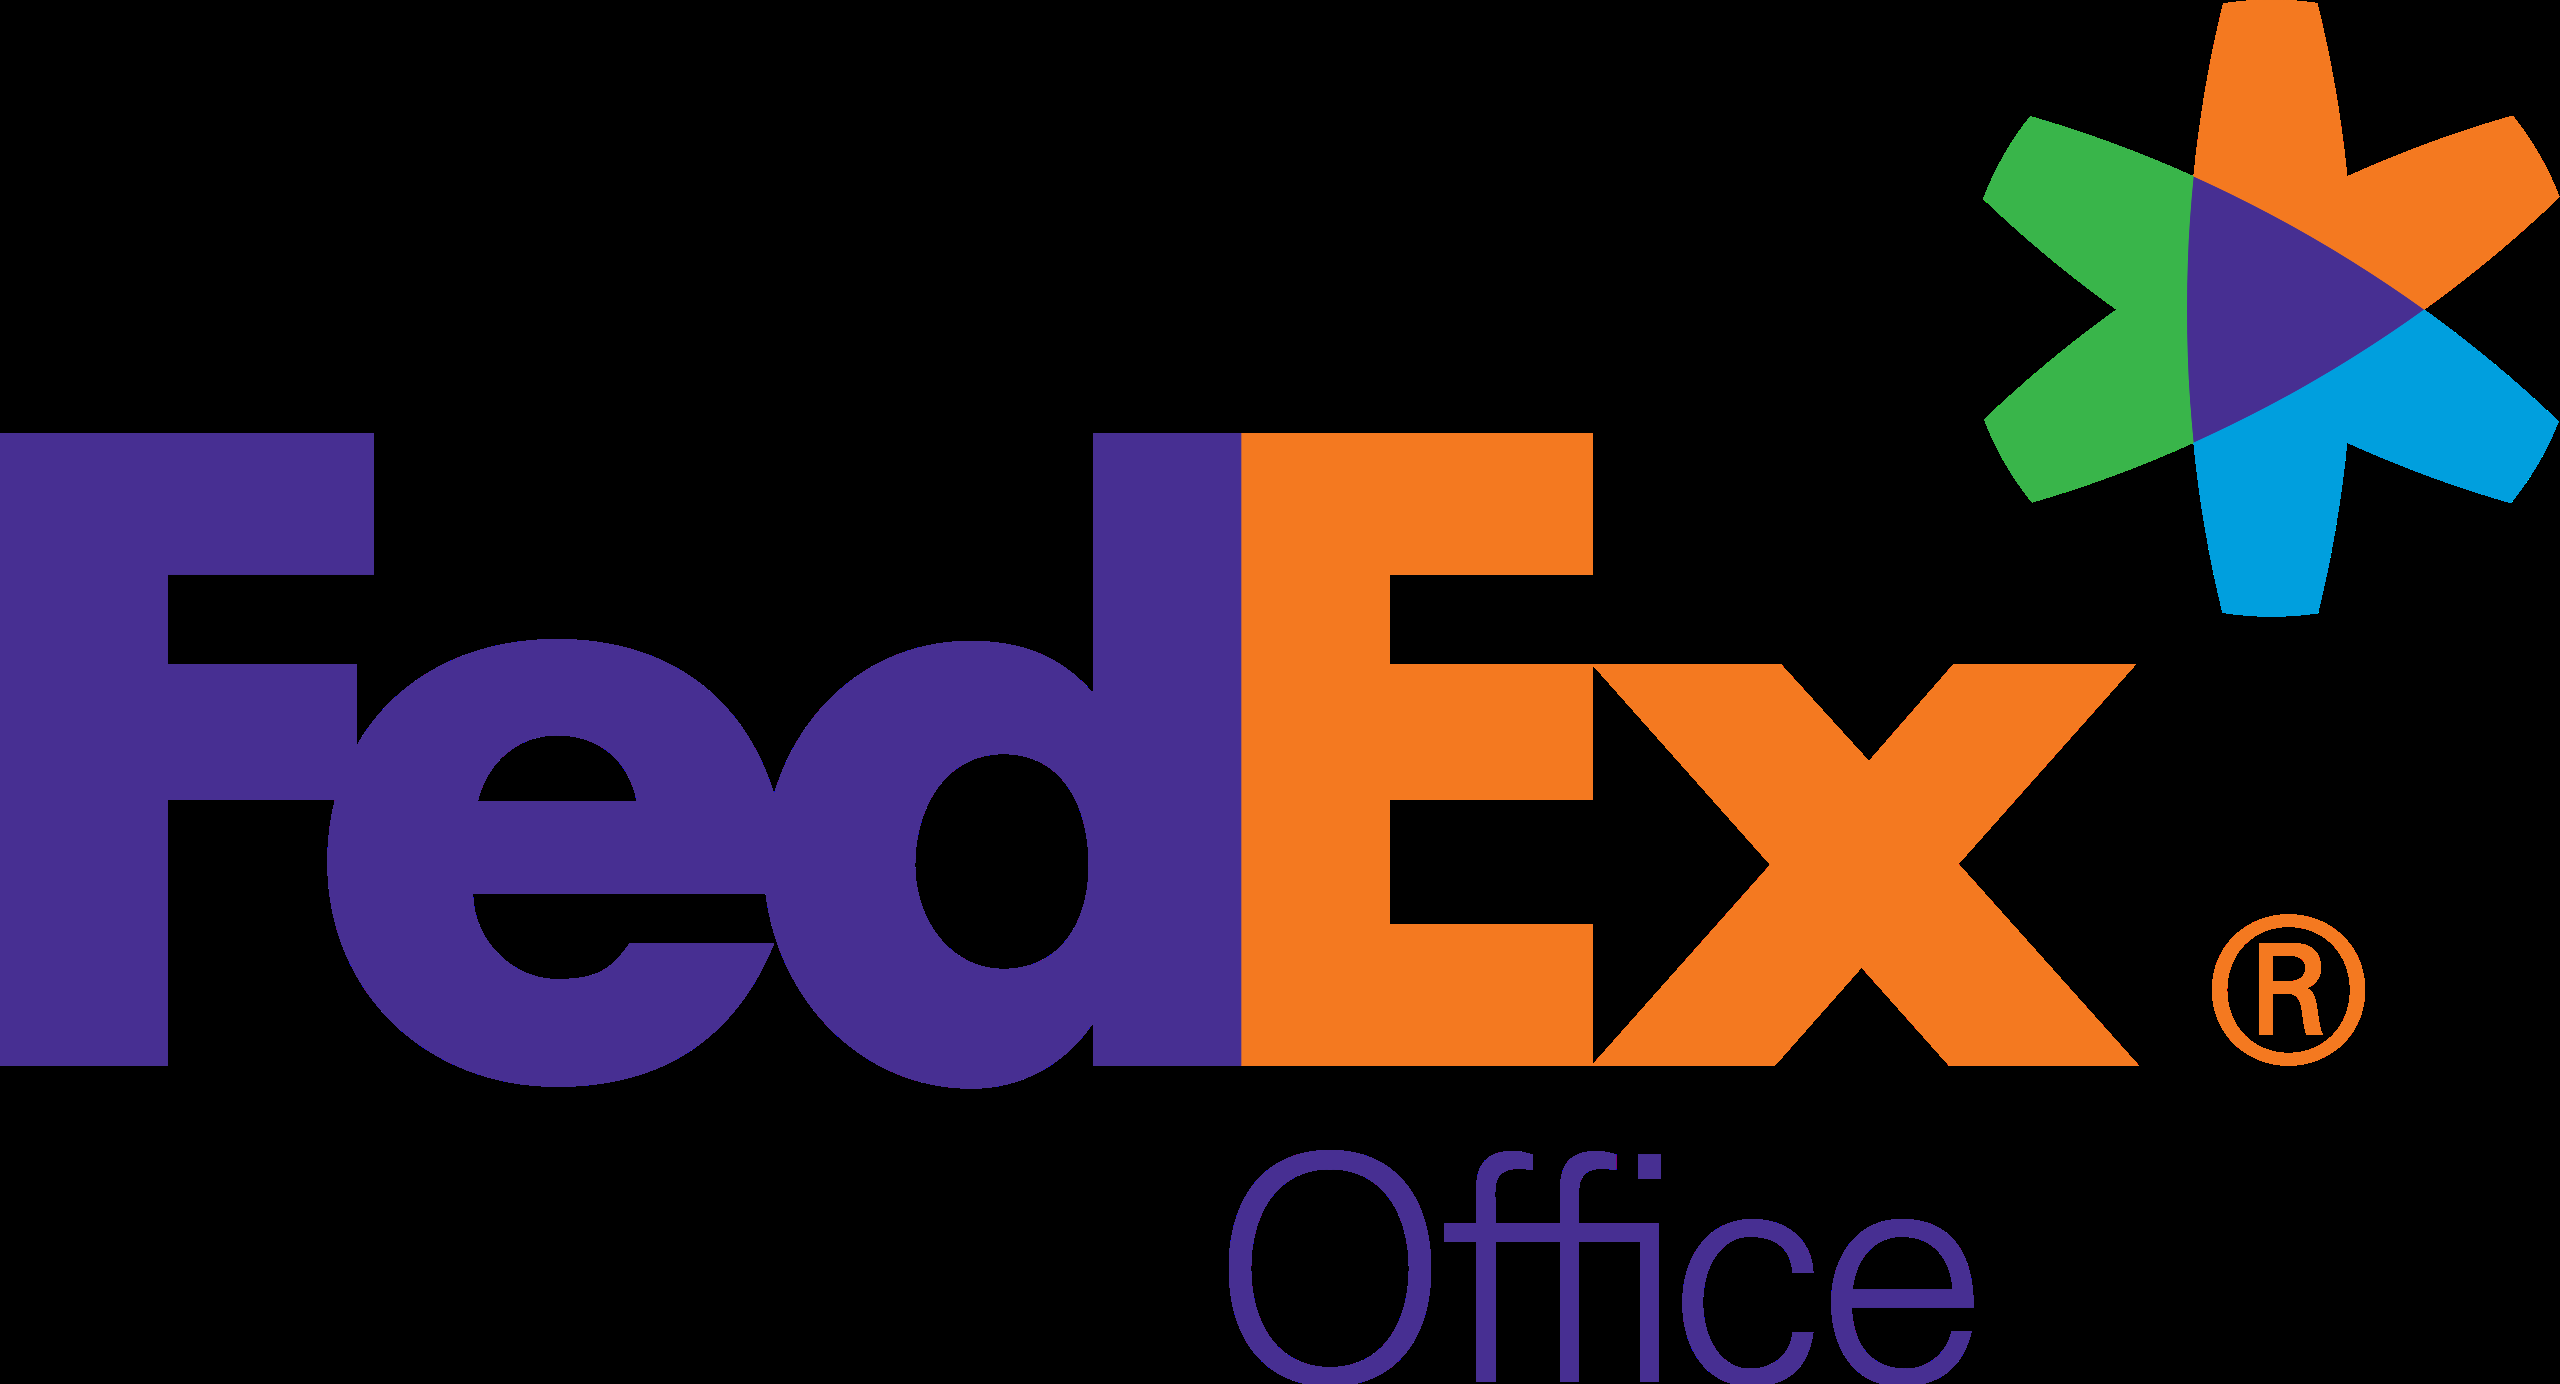 File:FedEx Office - 10 Logo